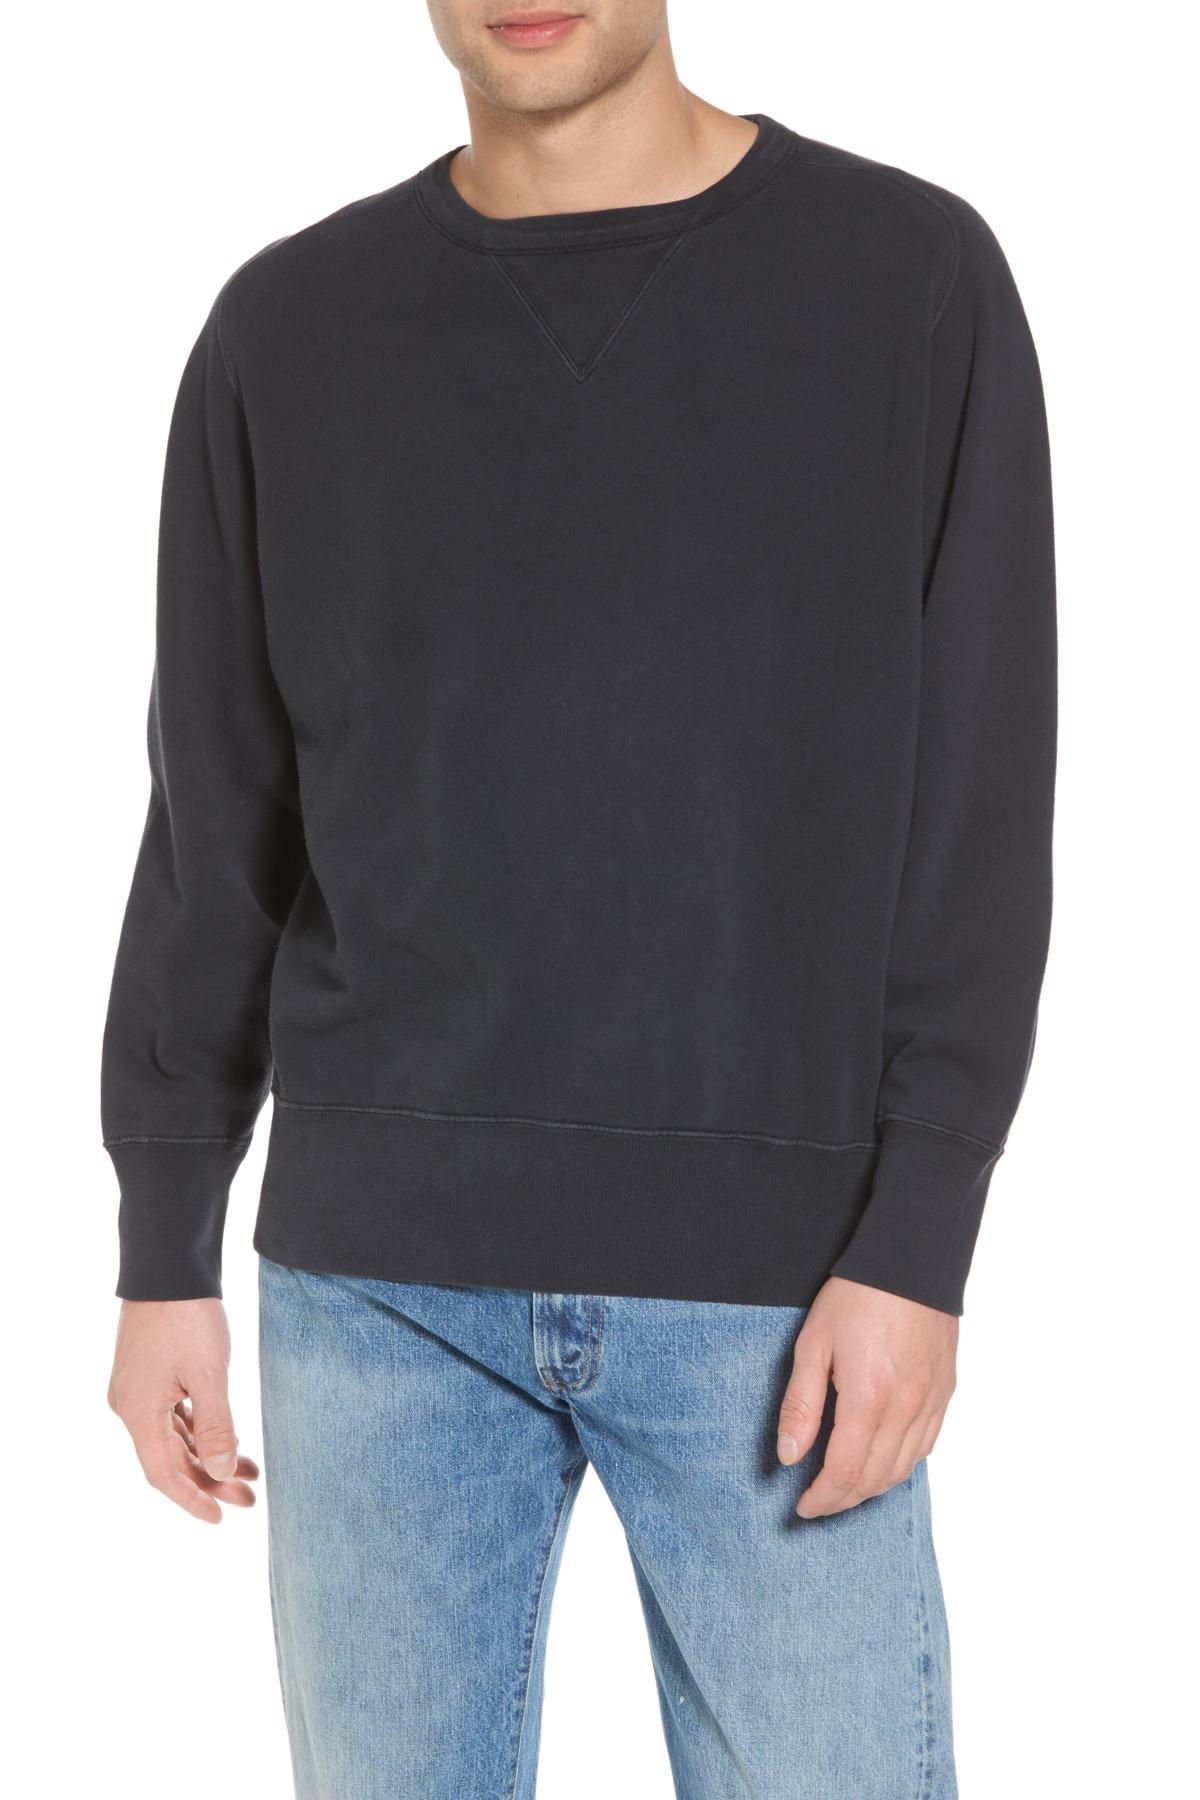 Levi's Cotton Levi's(r) Vintage Clothing Bay Meadows Sweatshirt in Black  for Men - Lyst